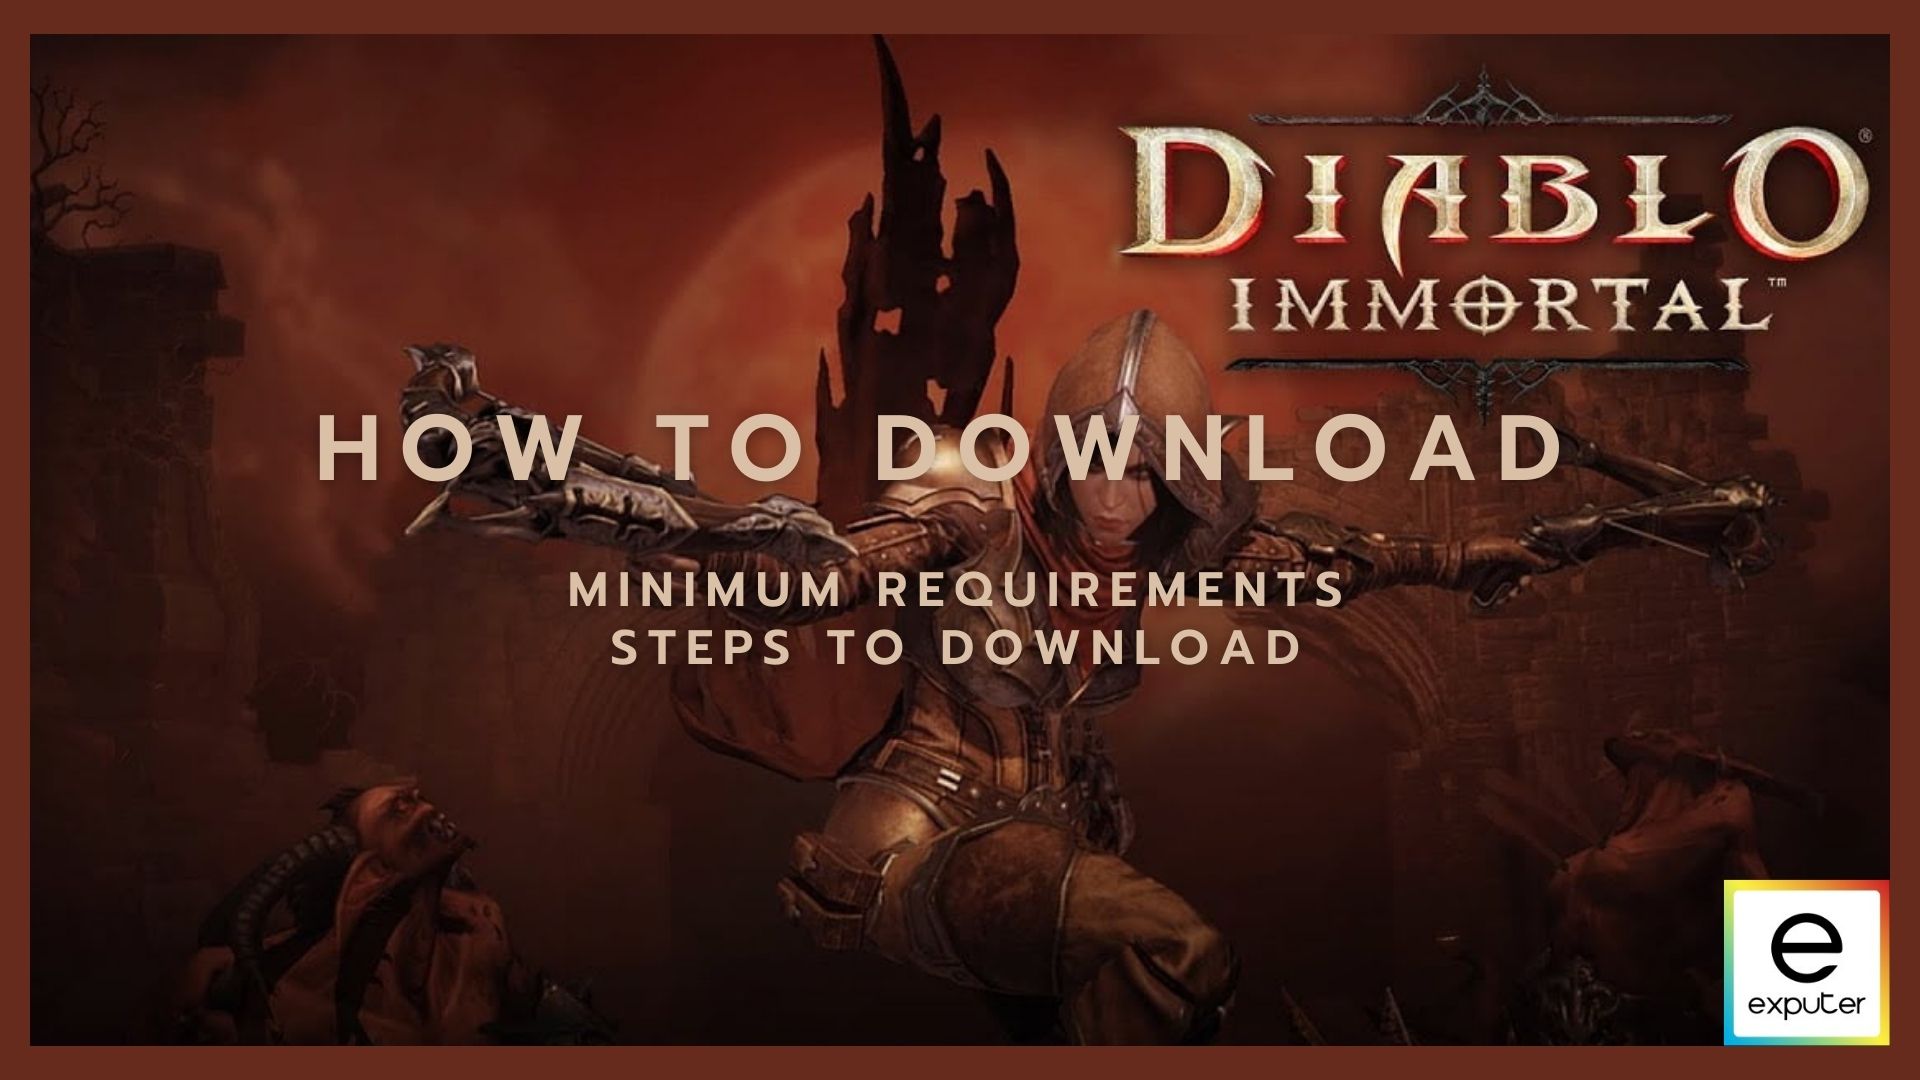 Downloading Diablo Immortal